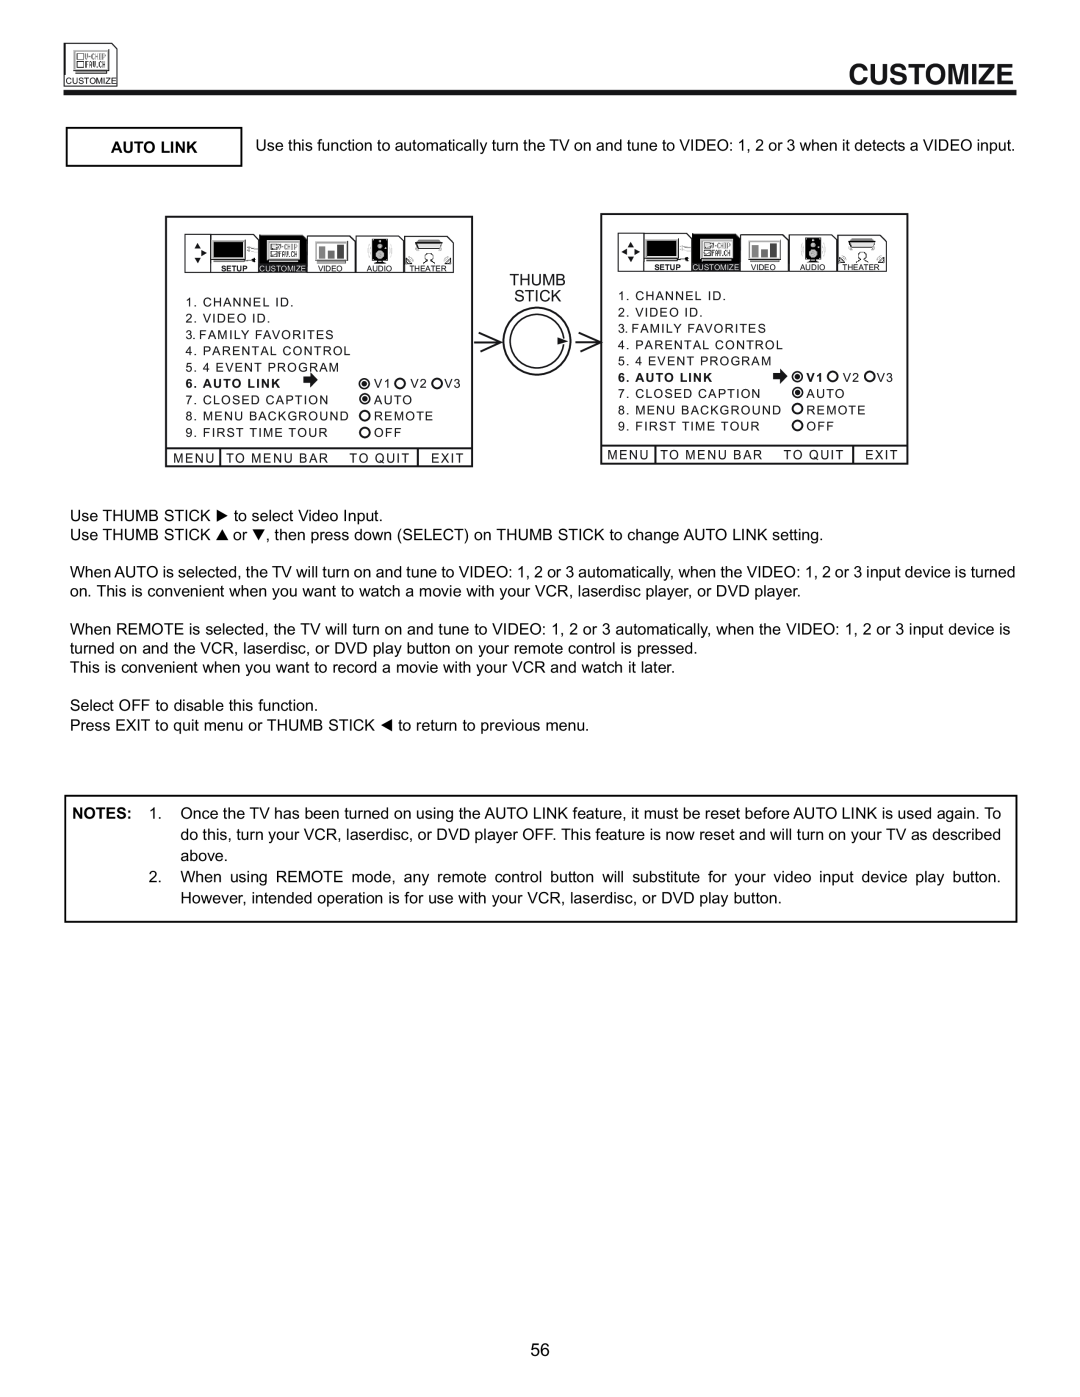 Hitachi 53SWX01W manual Customize, Auto Link 